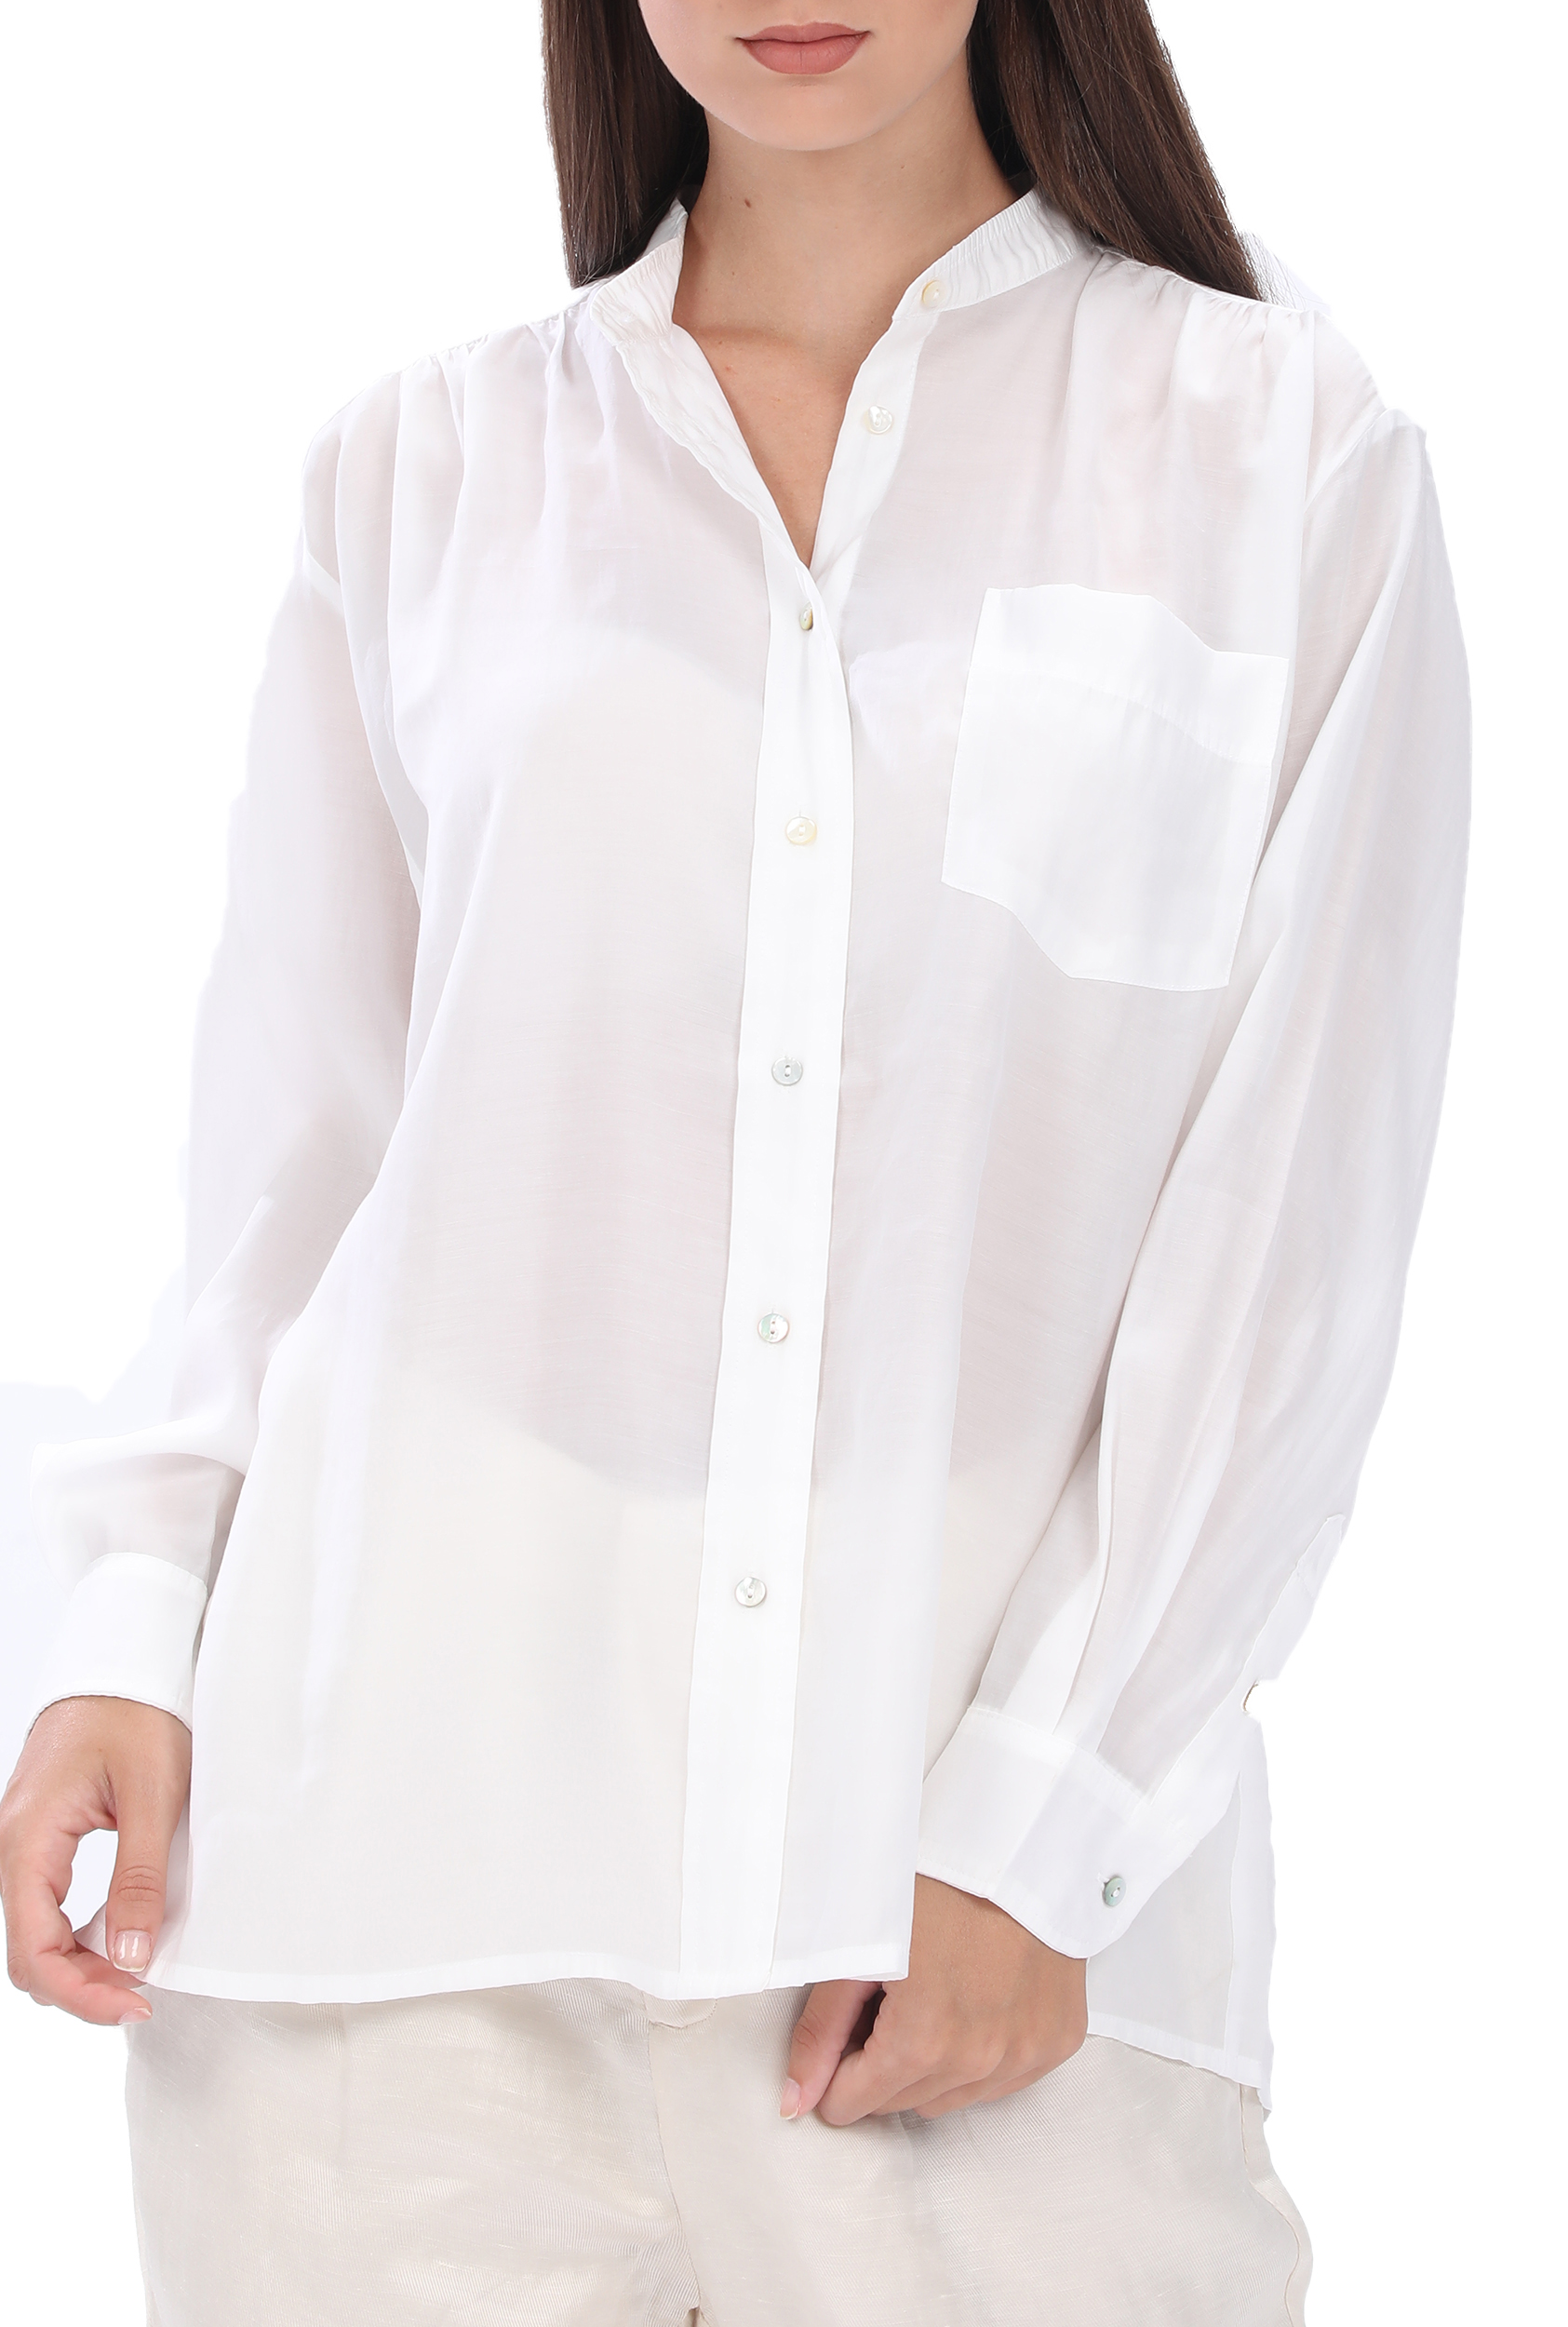 MOLLY BRACKEN – Γυναικειο πουκαμισο MOLLY BRACKEN λευκο